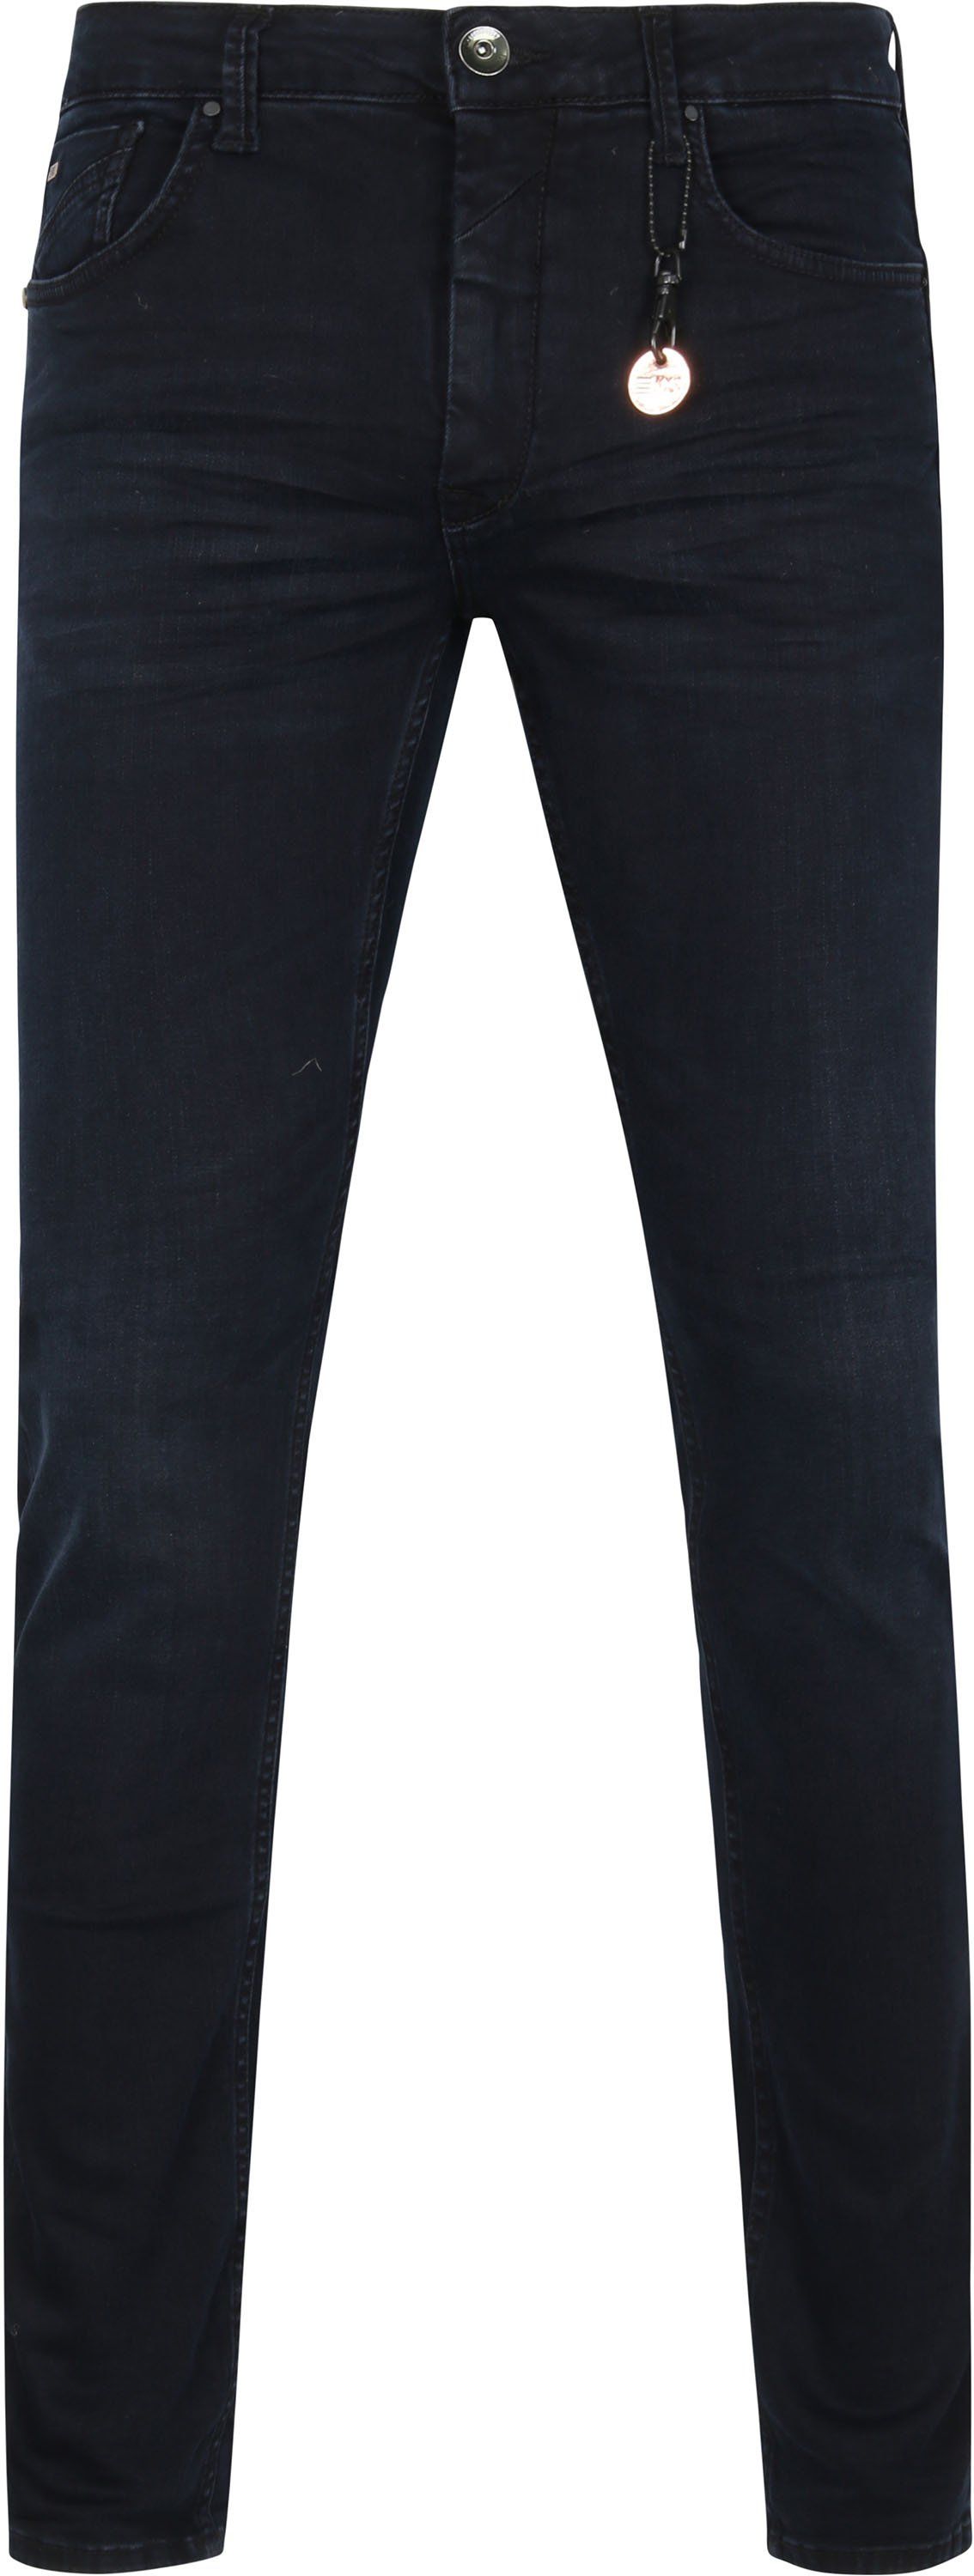 No-Excess Jeans 711 Denim Black size W 29